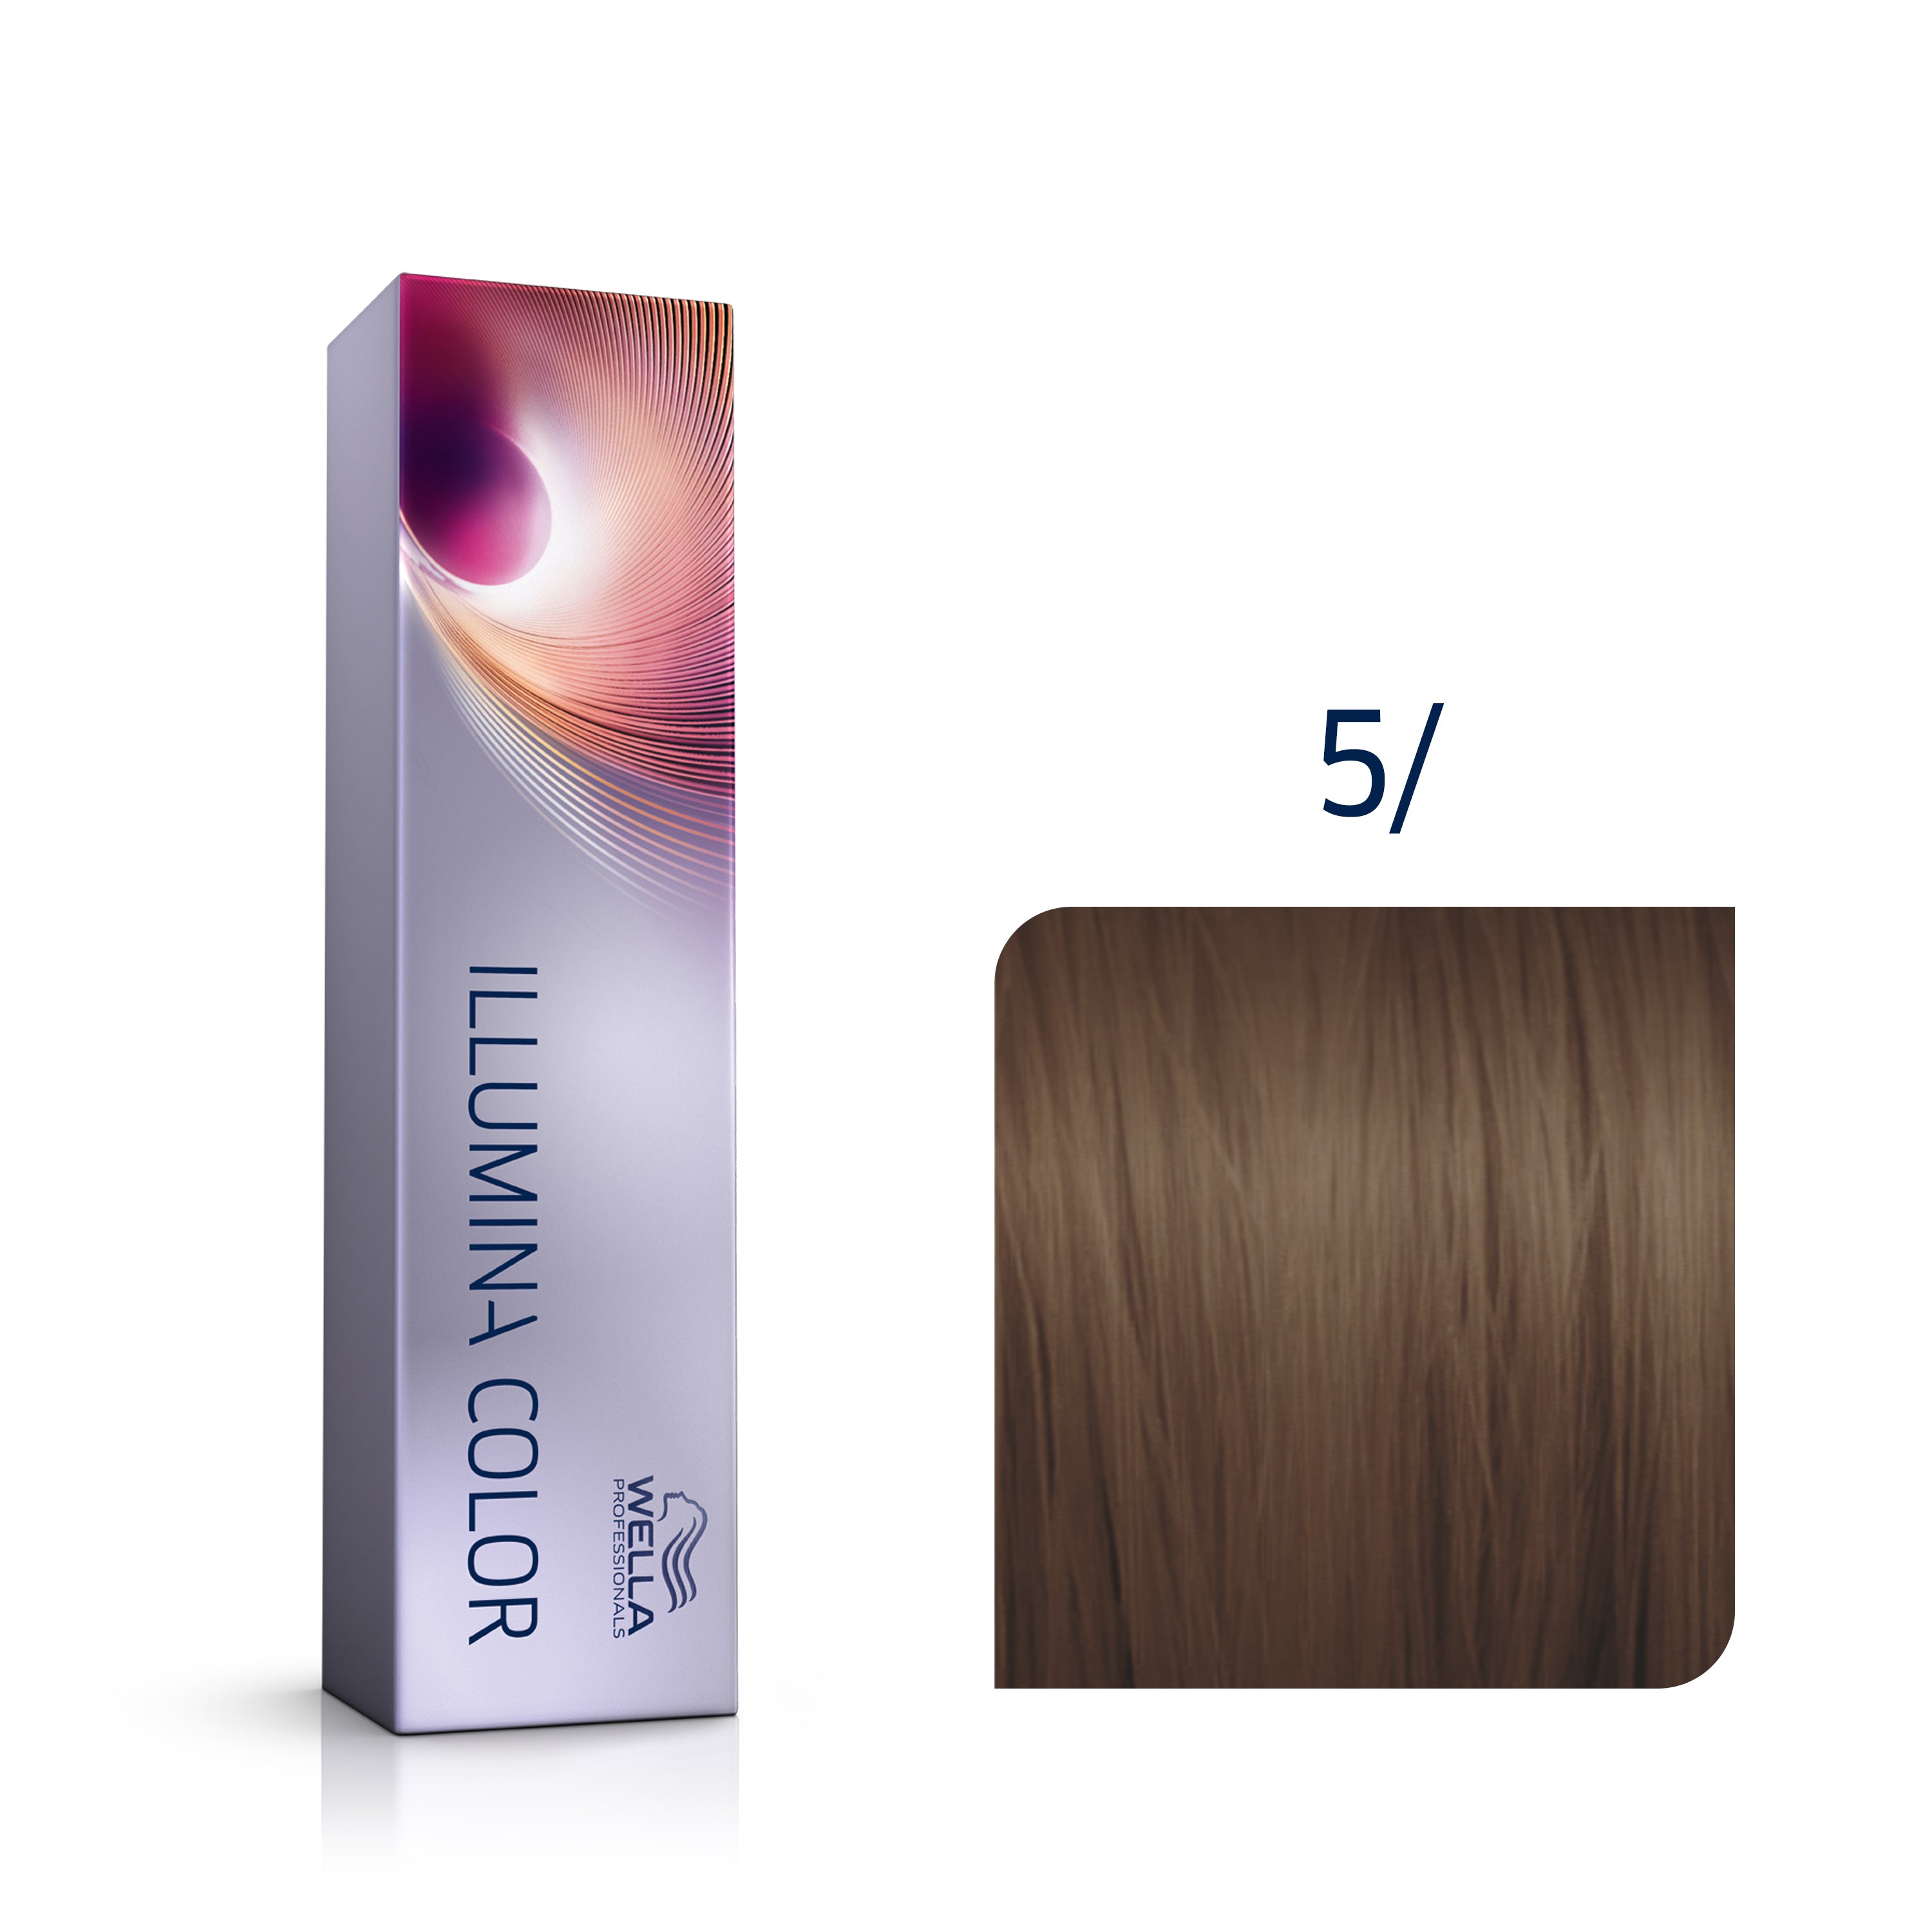 Wella Professional Illumina 5/ light brown 60 ml